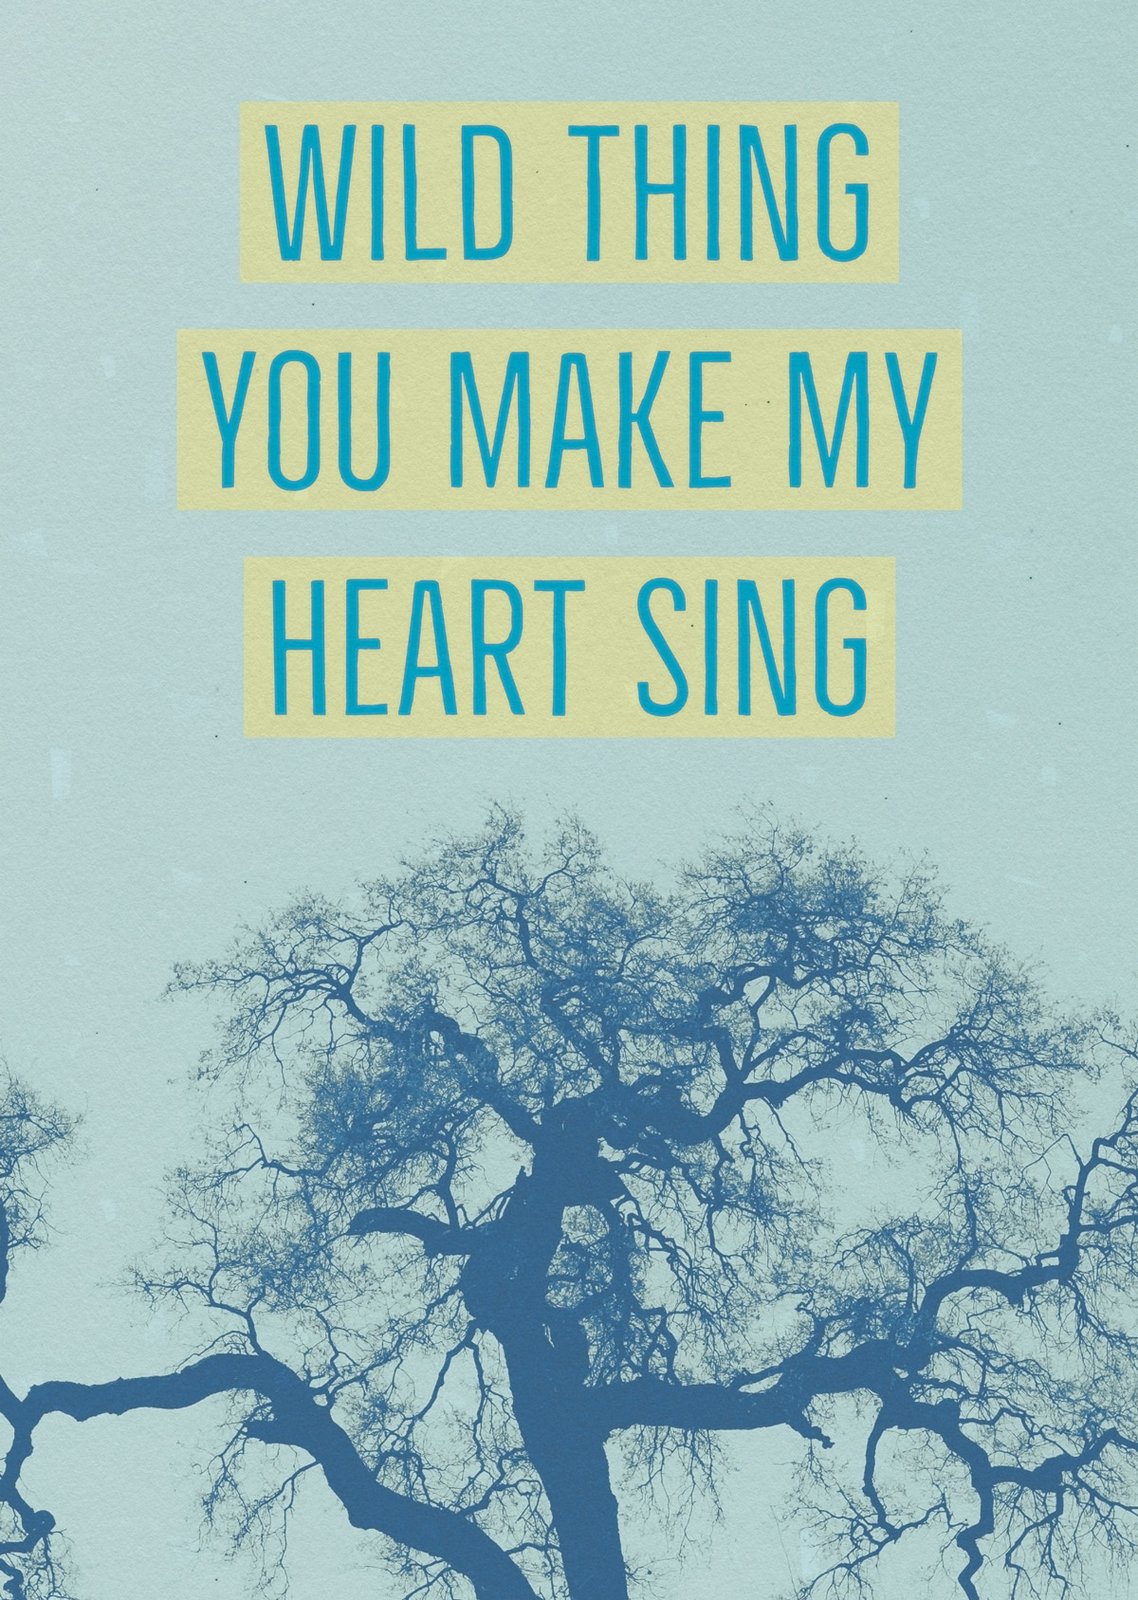 wild thing... you make my heart sing